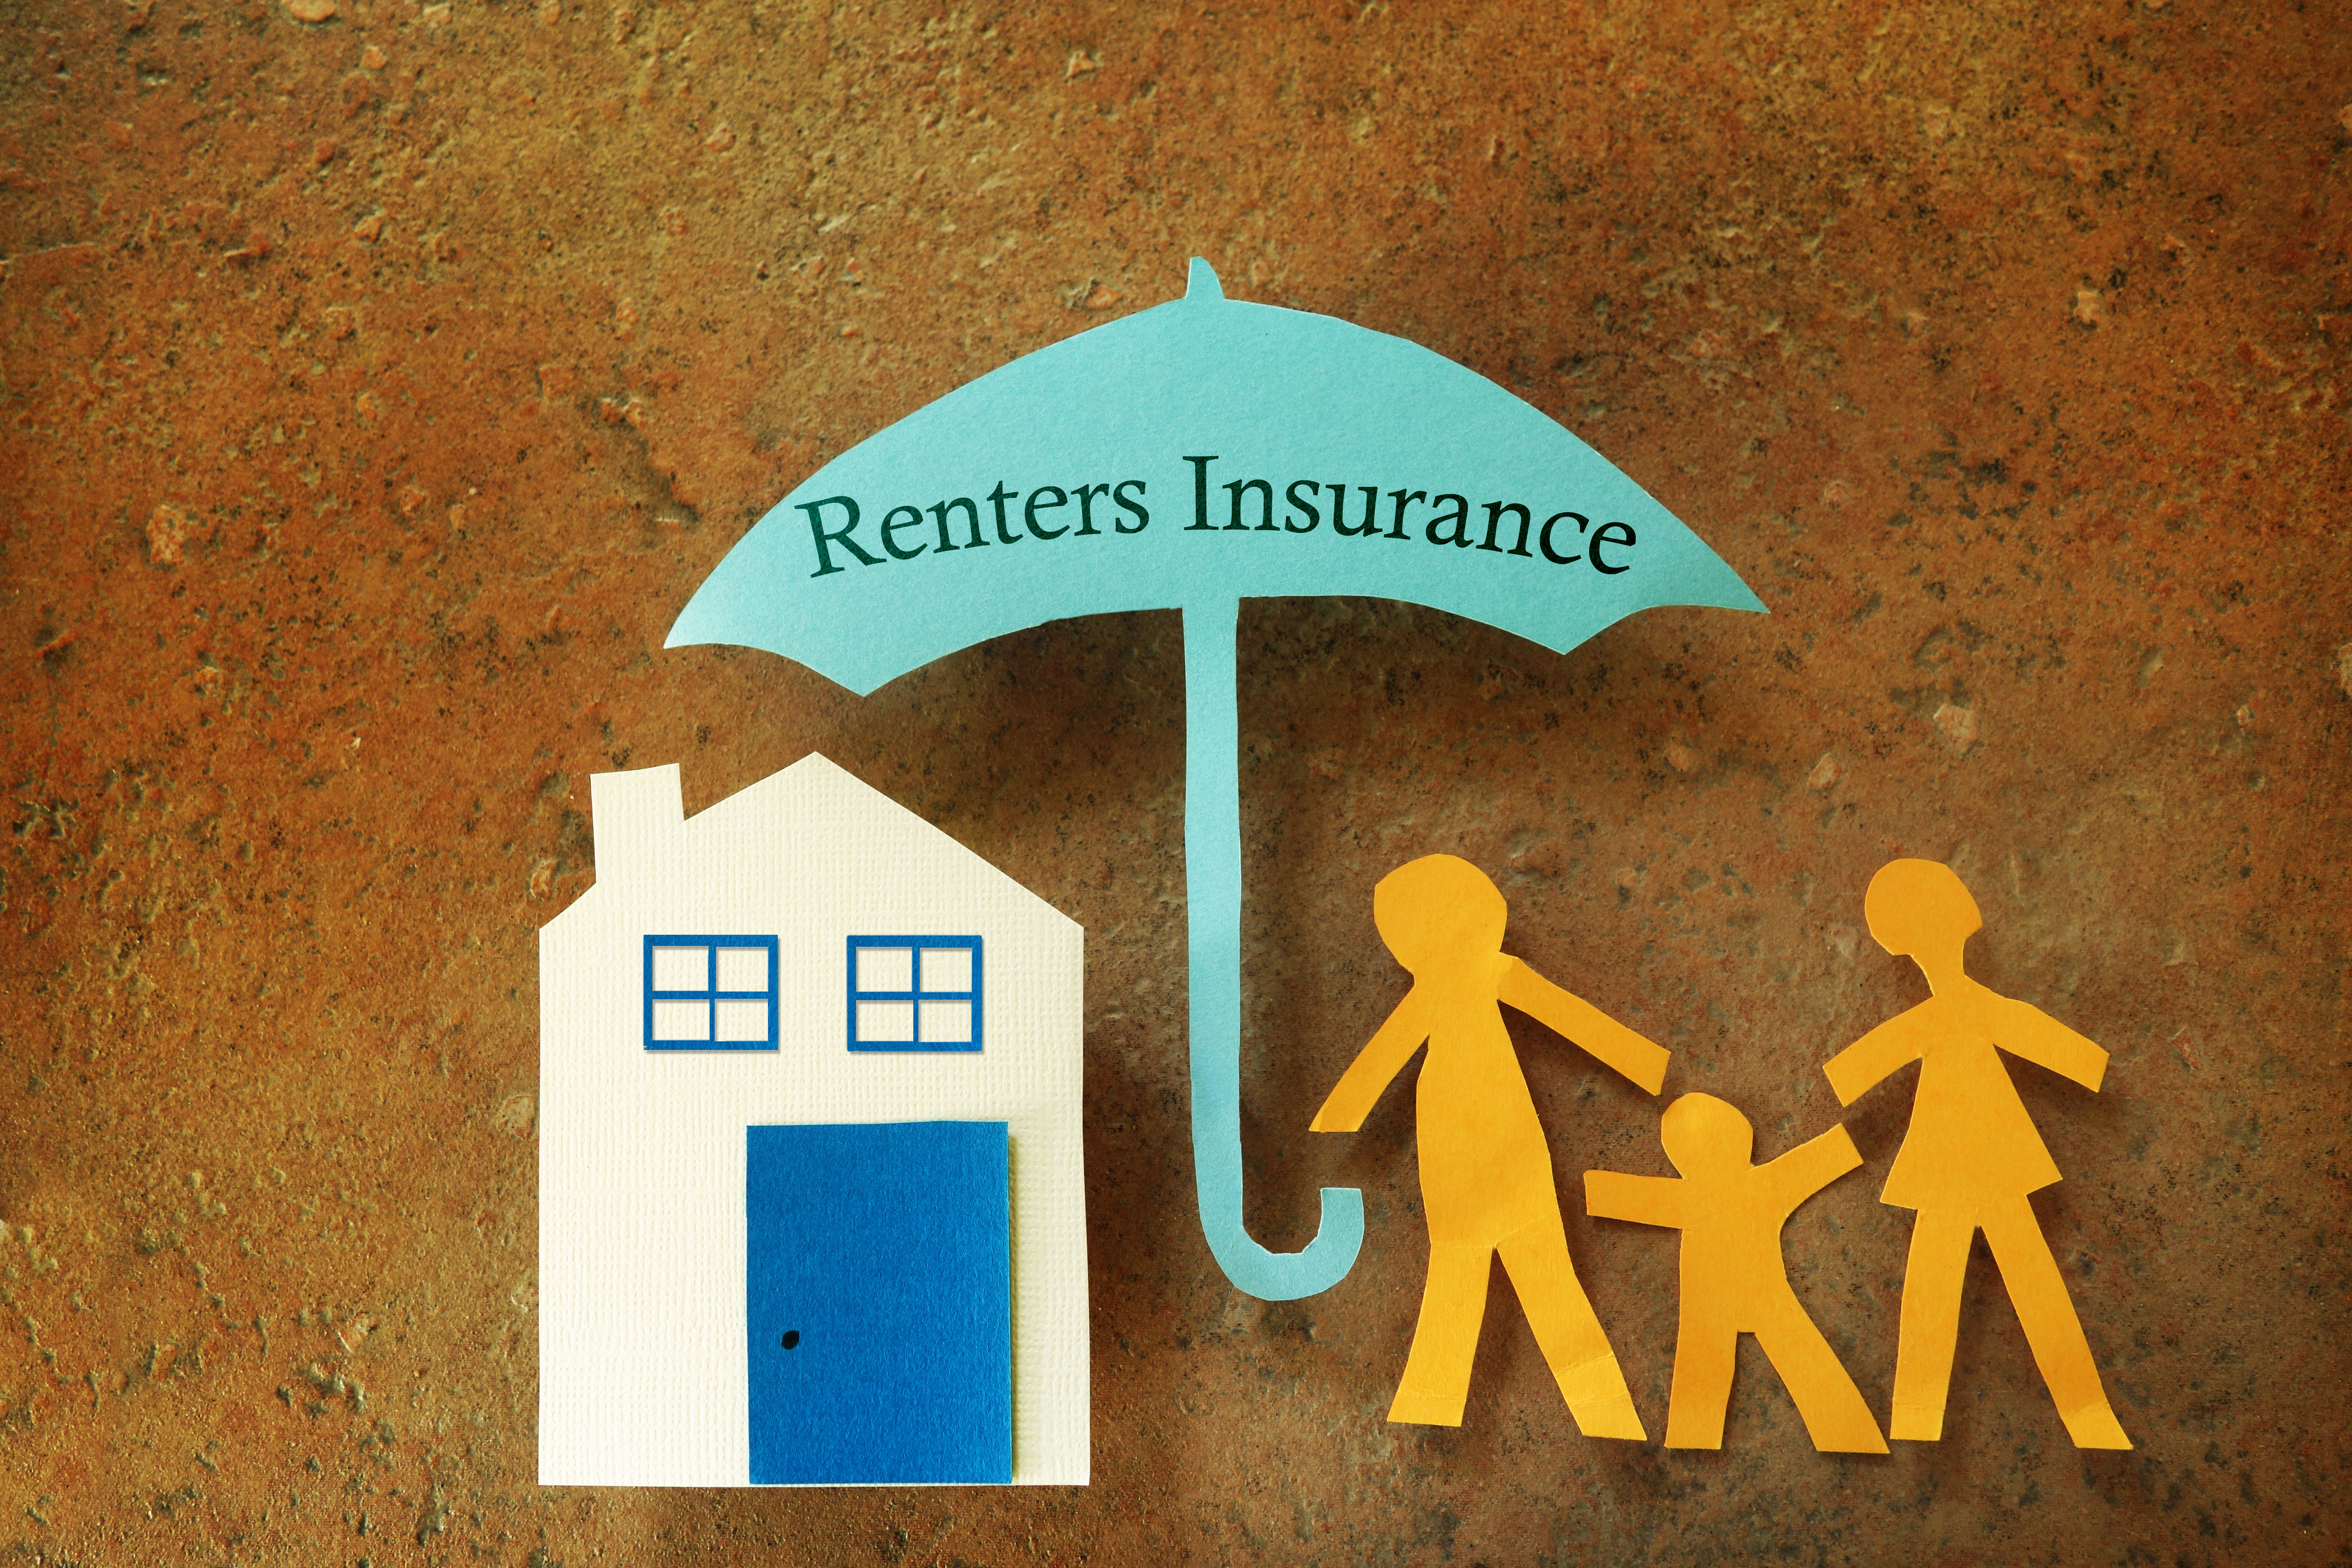 Renters Insurance image